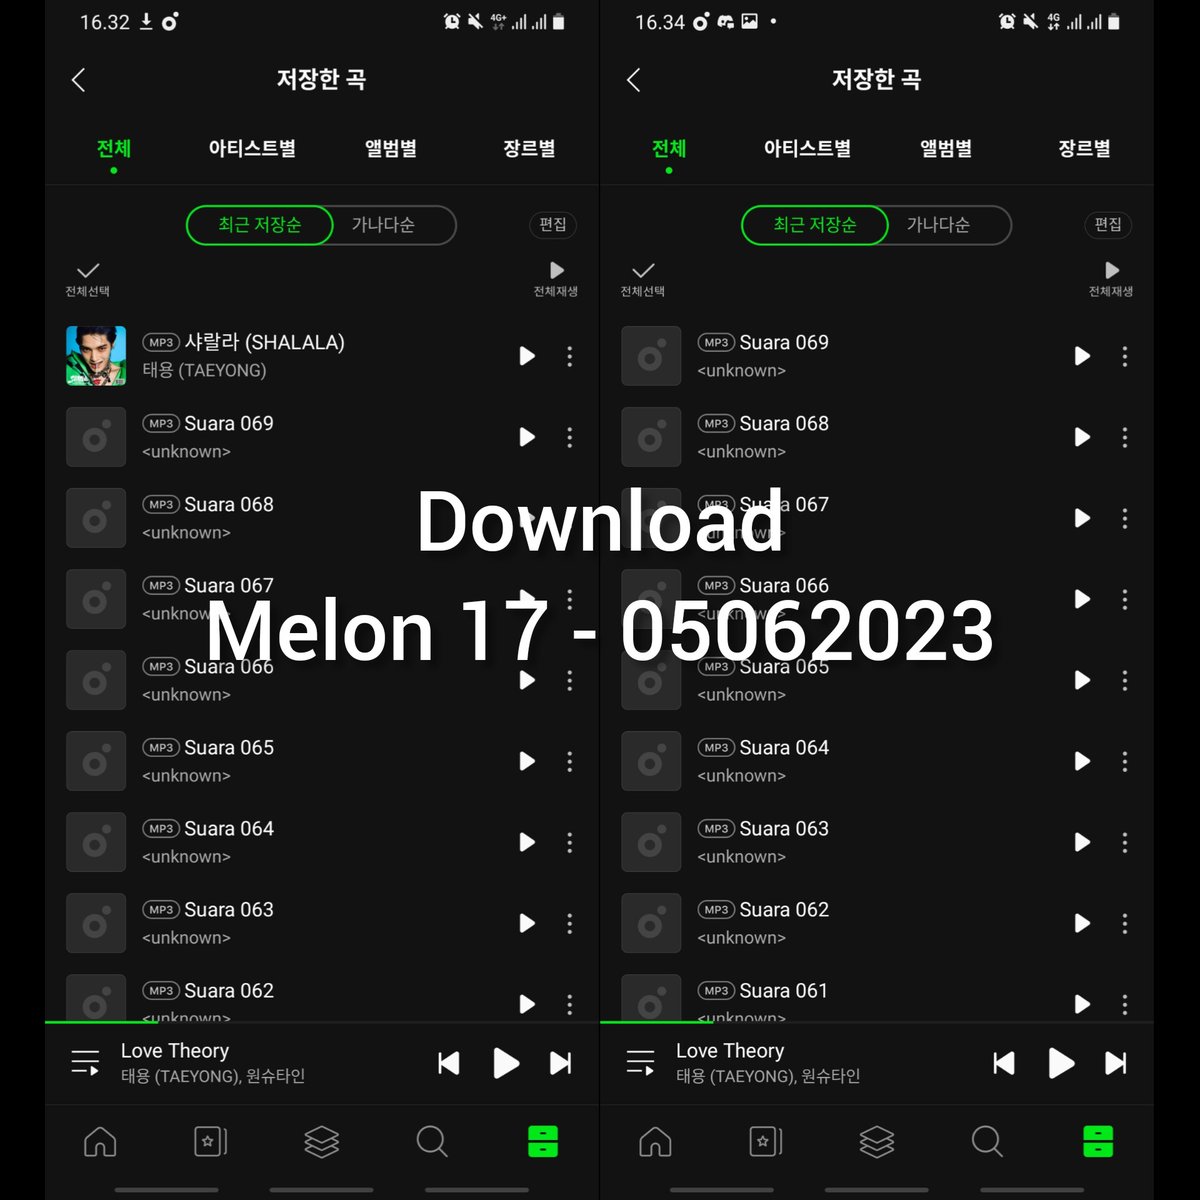 🌹 Proof Download Melon 🌹
@TYP_stream 
@TaeyongProject 
#TaeyongShalalaTYP 
#TeamMelon